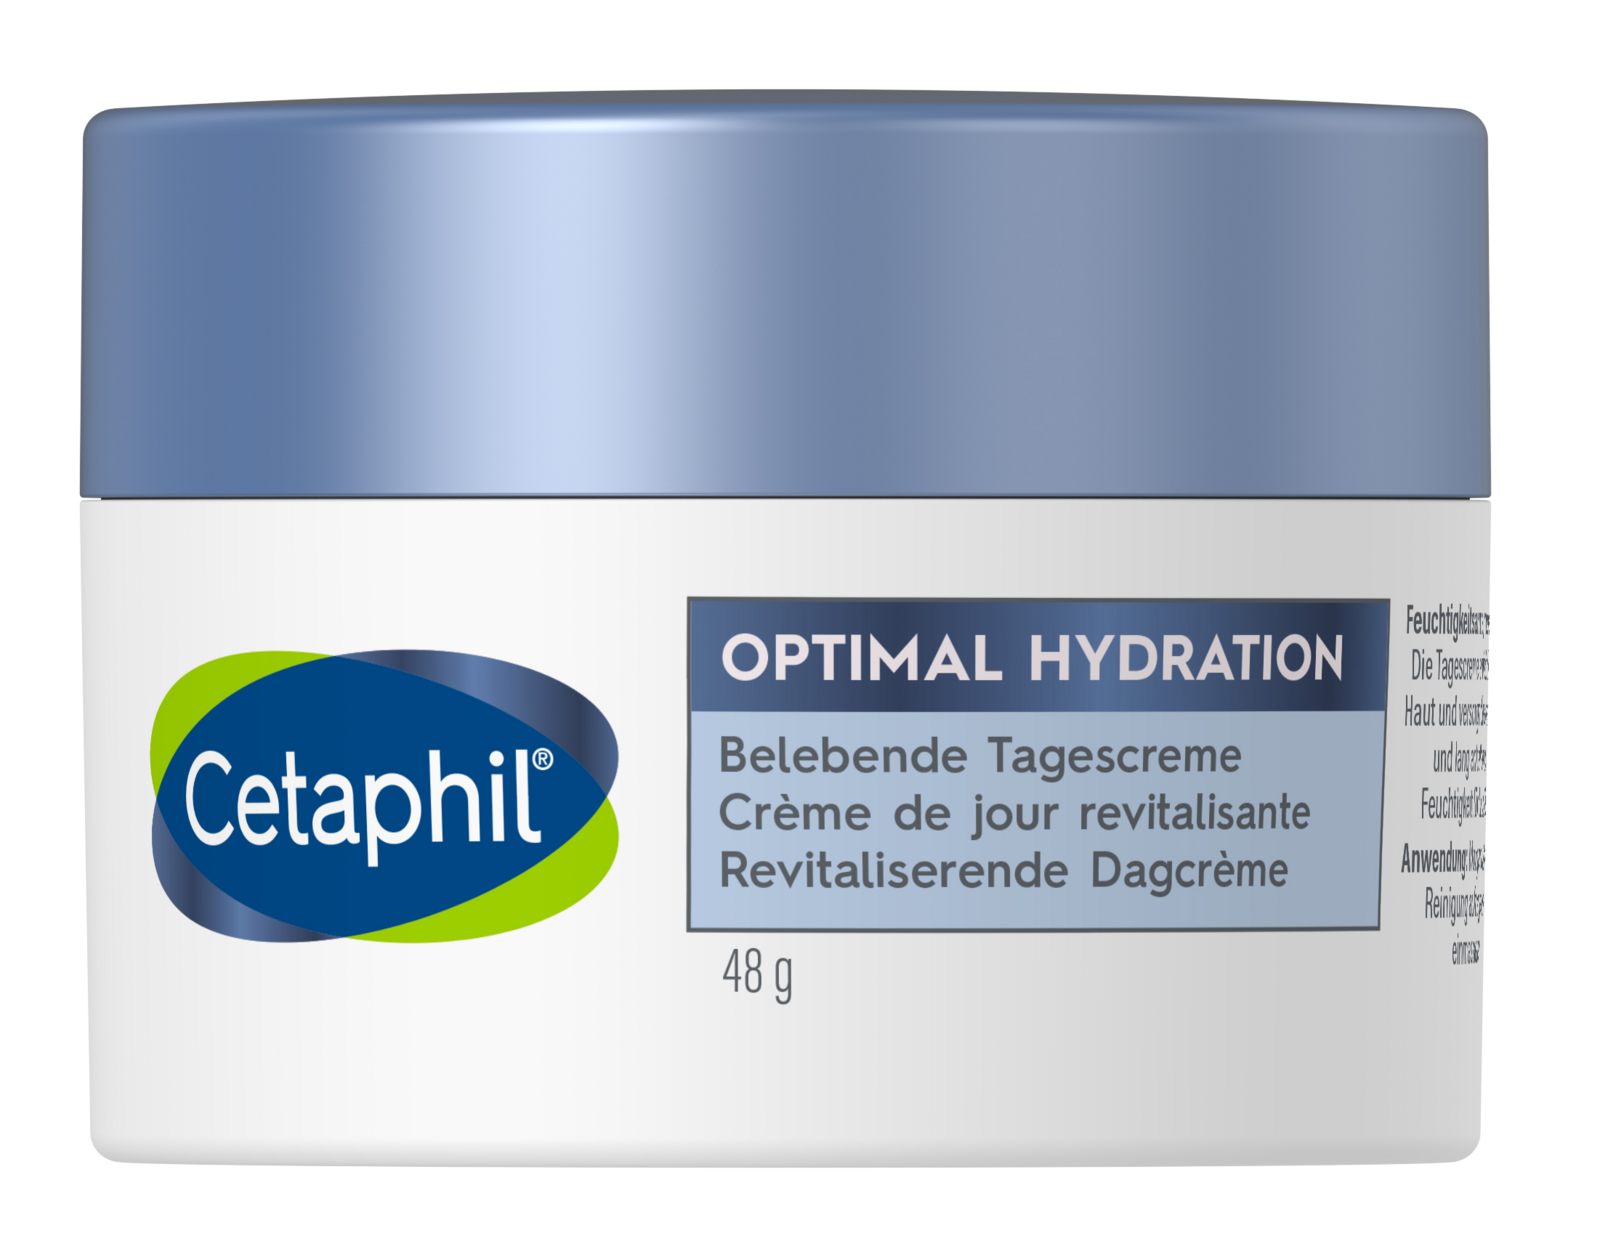 Cetaphil Optimal Hydration Belebende Tagescreme, feuchtigkeitsarme, müde Haut